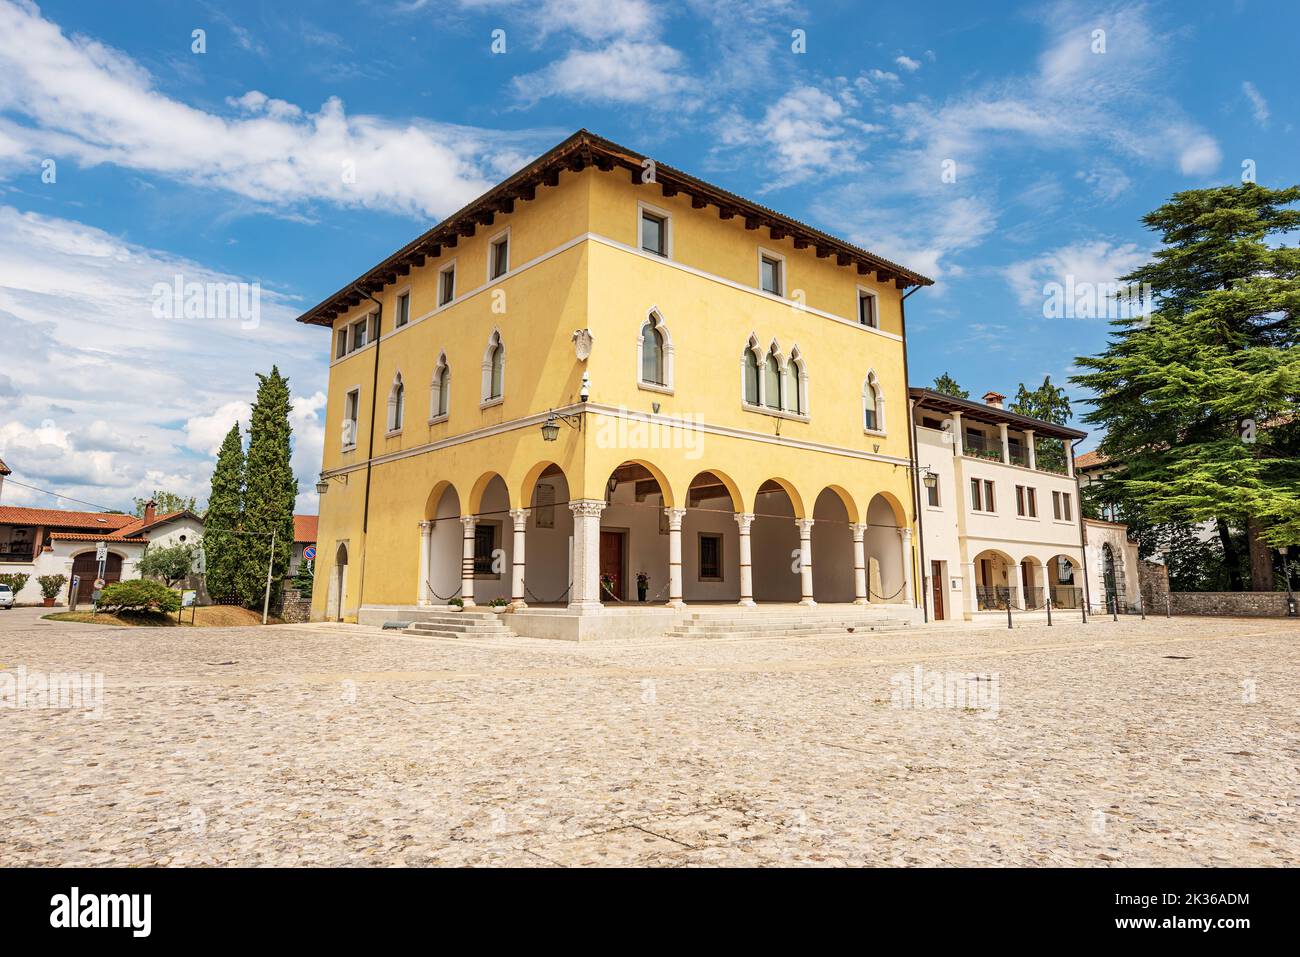 Spilimbergo. Ancient palace called La Loggia or La Pergola, XIV century, in Venetian style. Cathedral square, Pordenone, Friuli-Venezia Giulia, Italy. Stock Photo